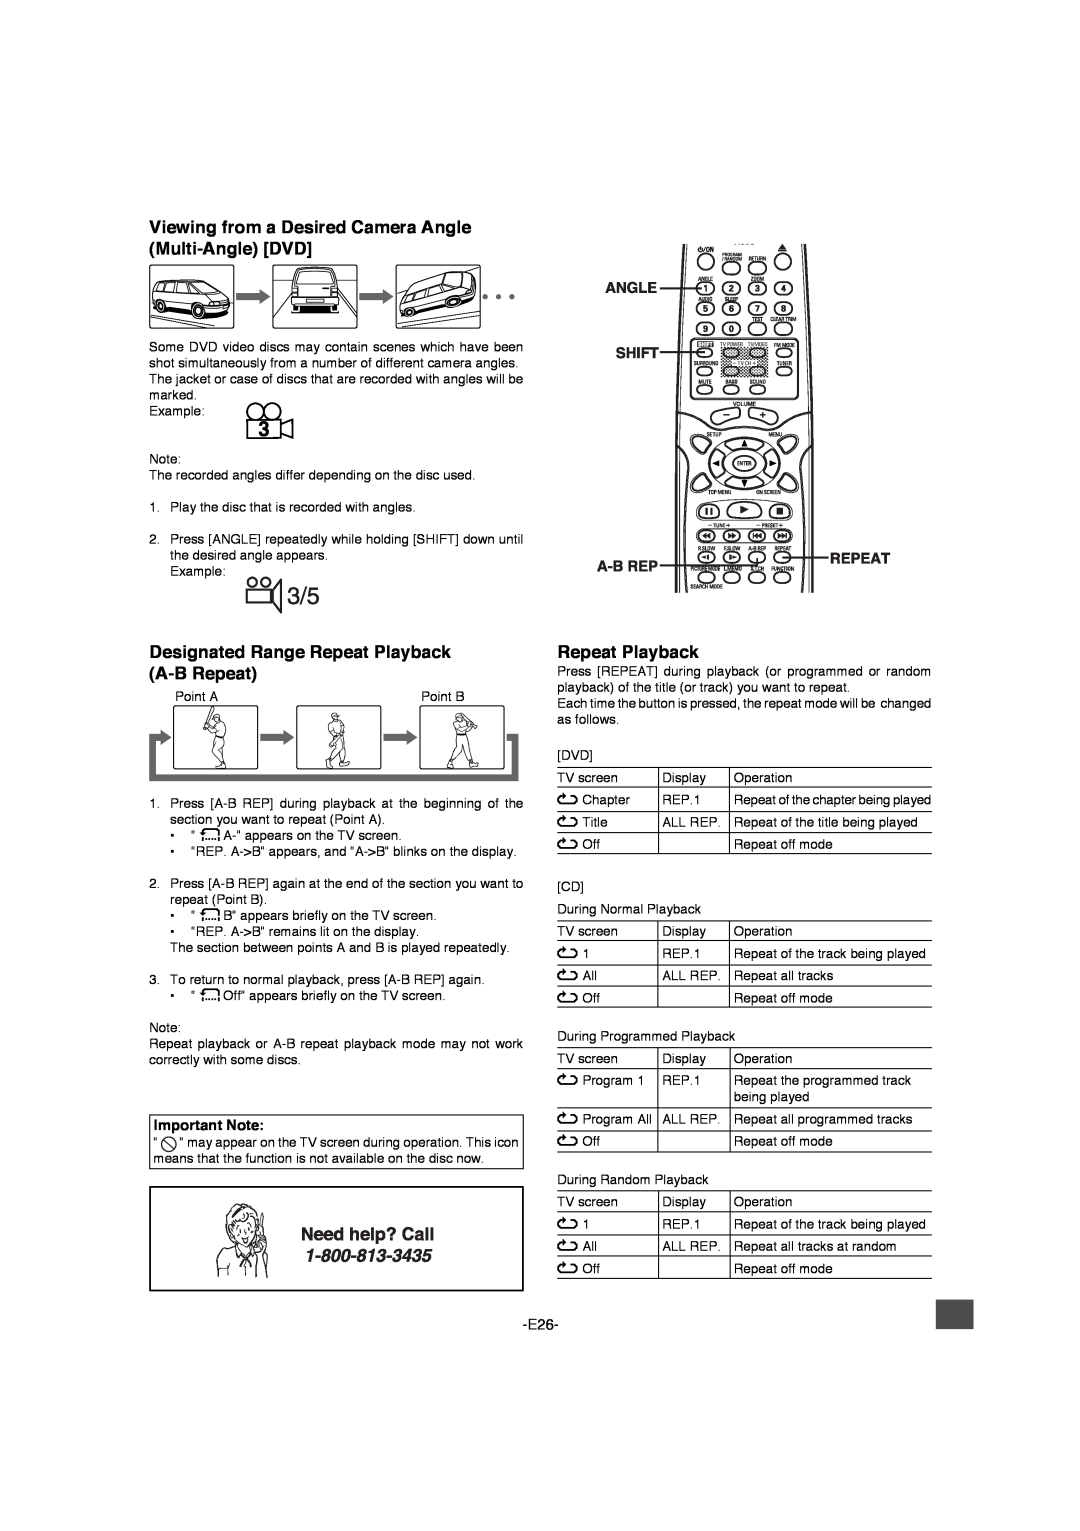 Sanyo DWM-4500 instruction manual Designated Range Repeat Playback A-BRepeat 